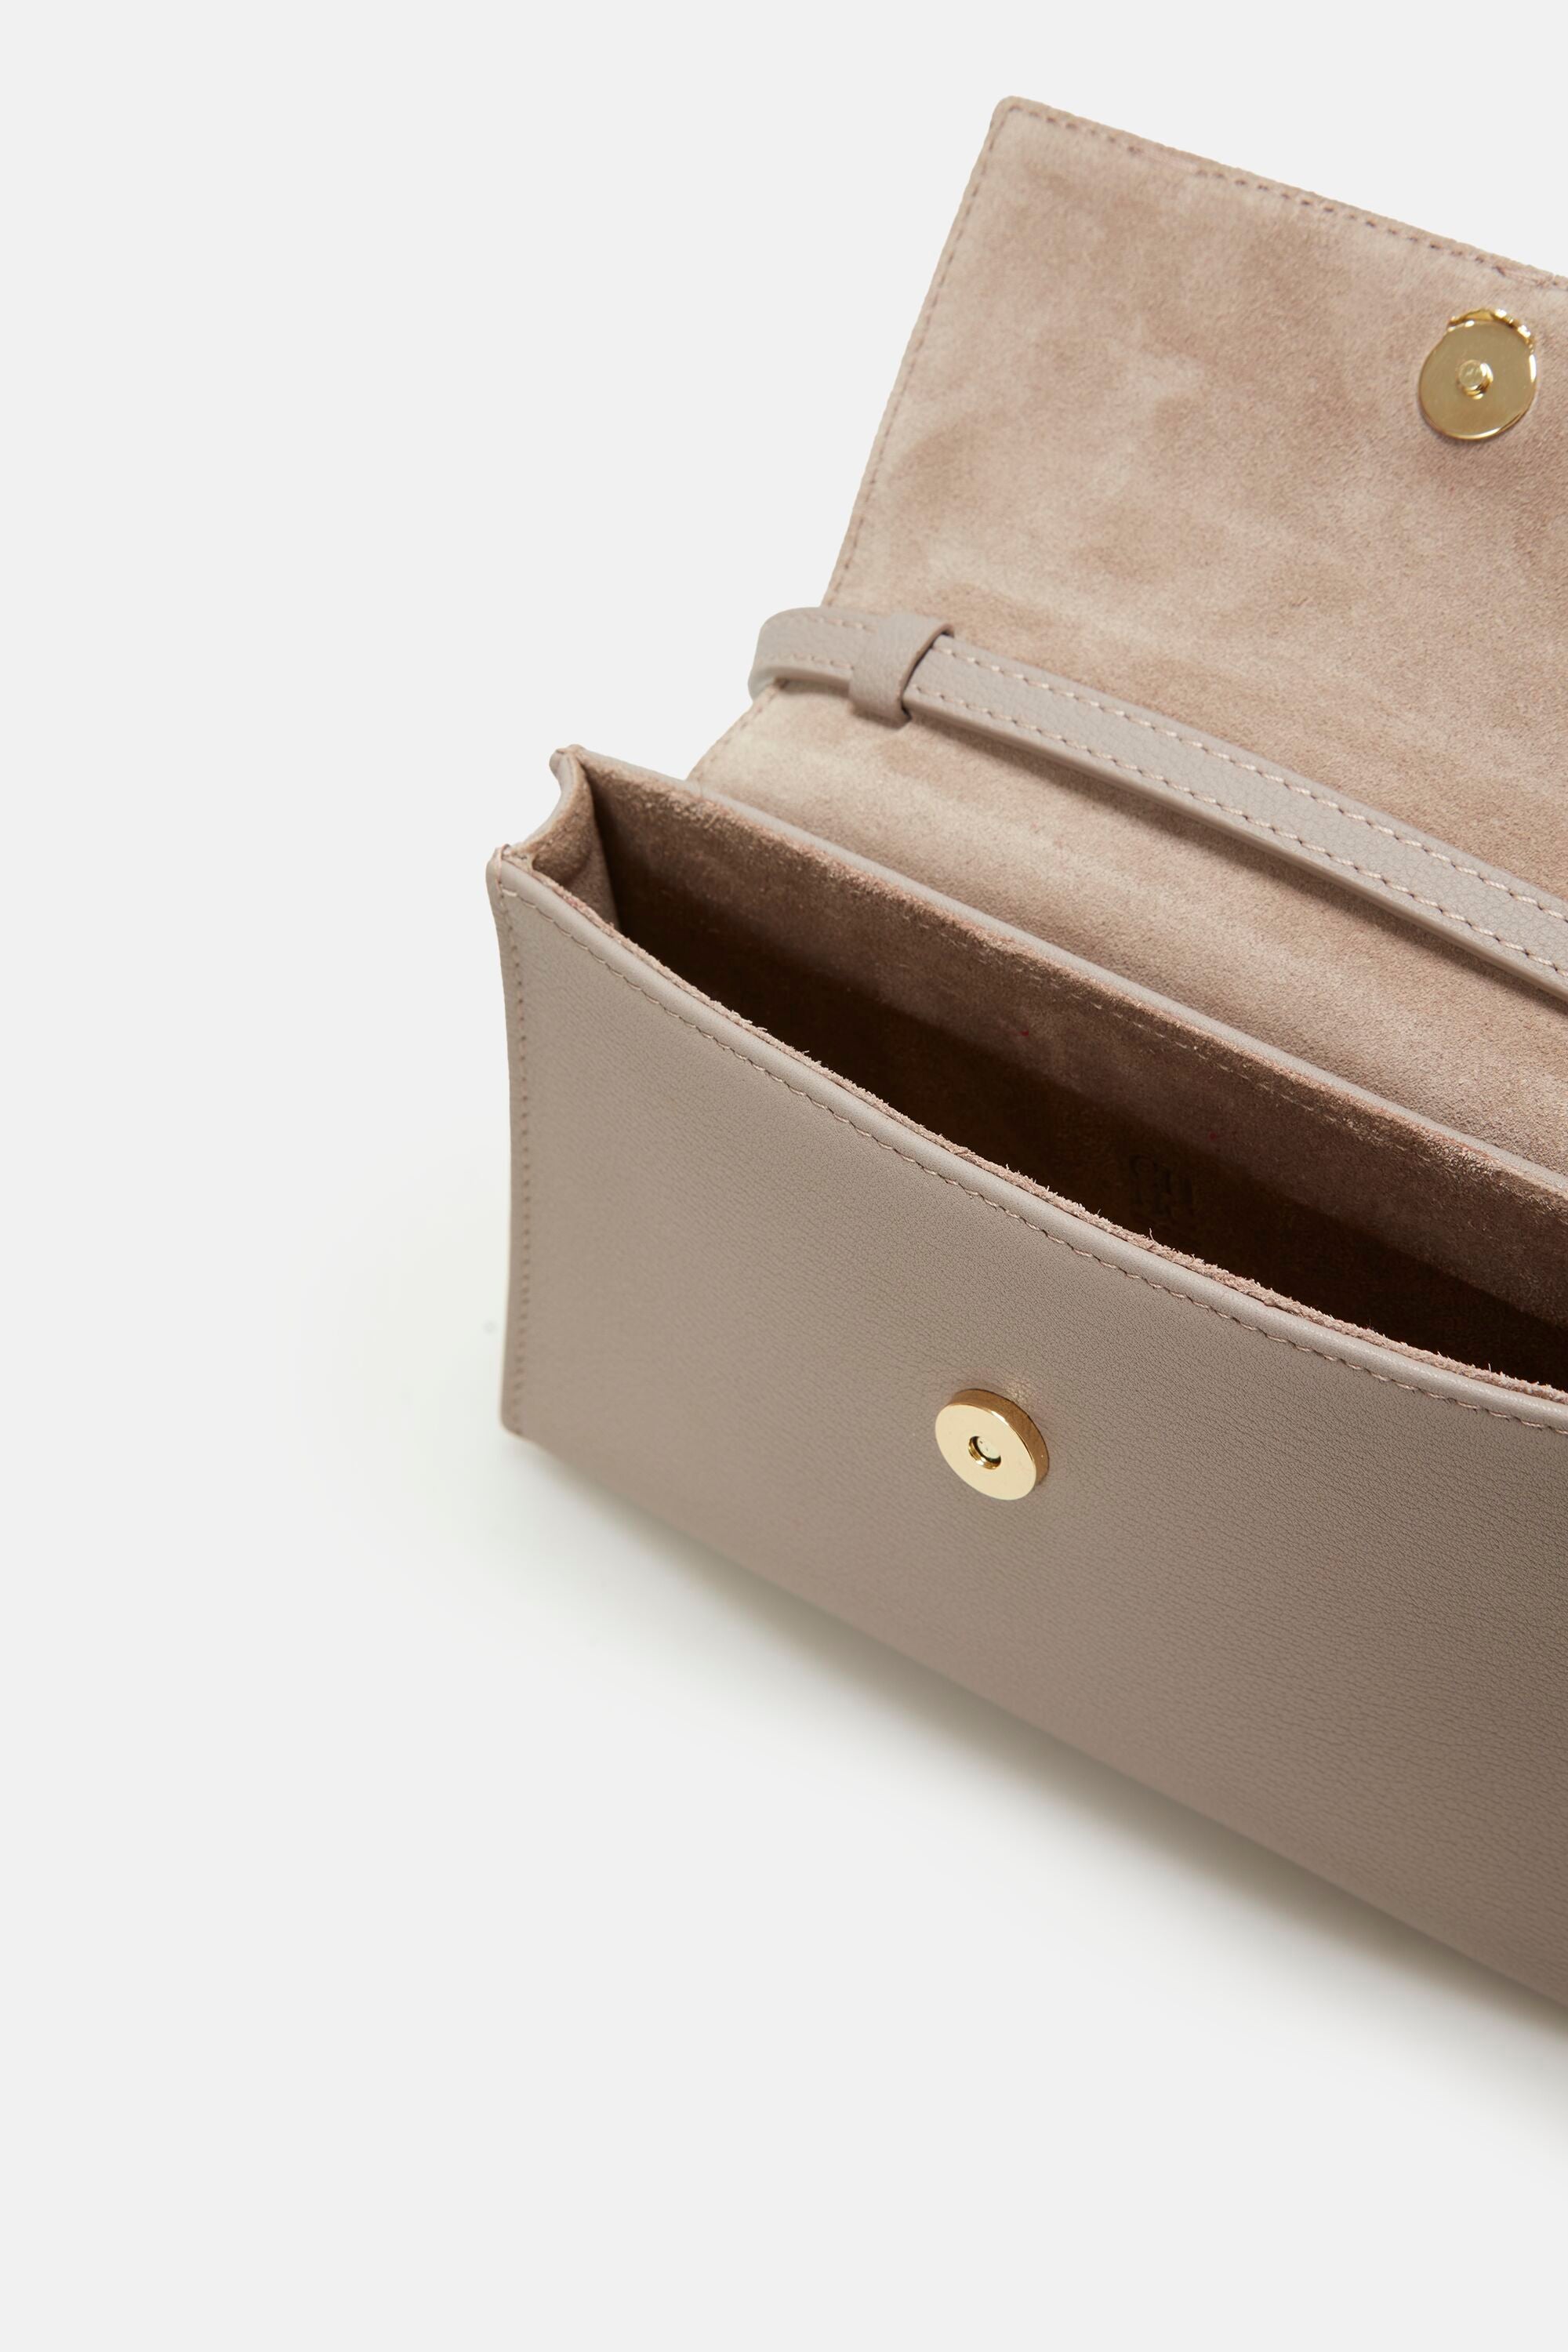 CAROLINA HERRERA Handbag 👜 Luggage / Camel / Cognac New